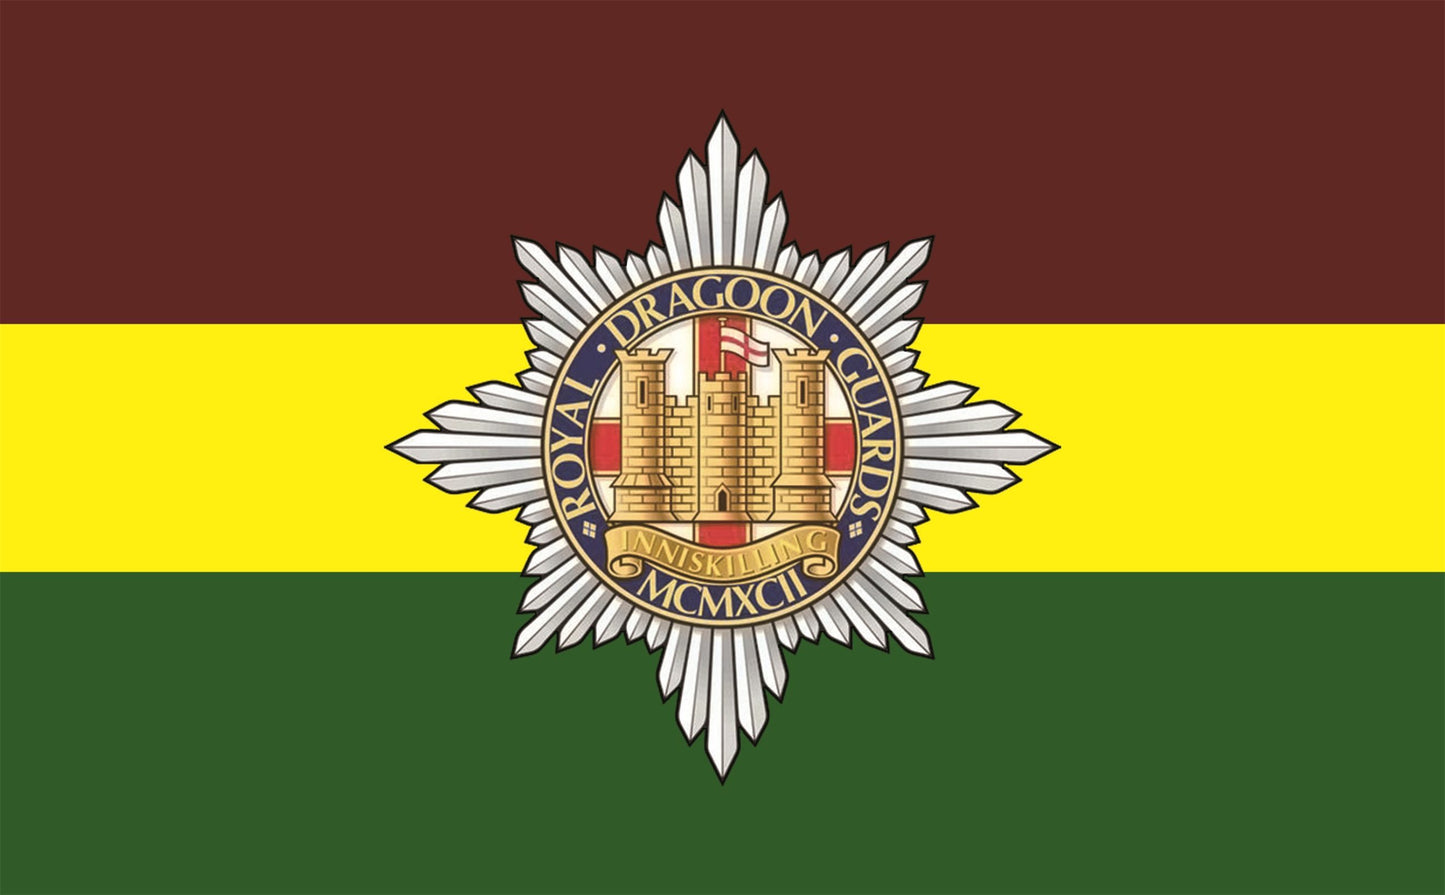 Royal Dragoon guards flag 5ft x 3ft with eyelets